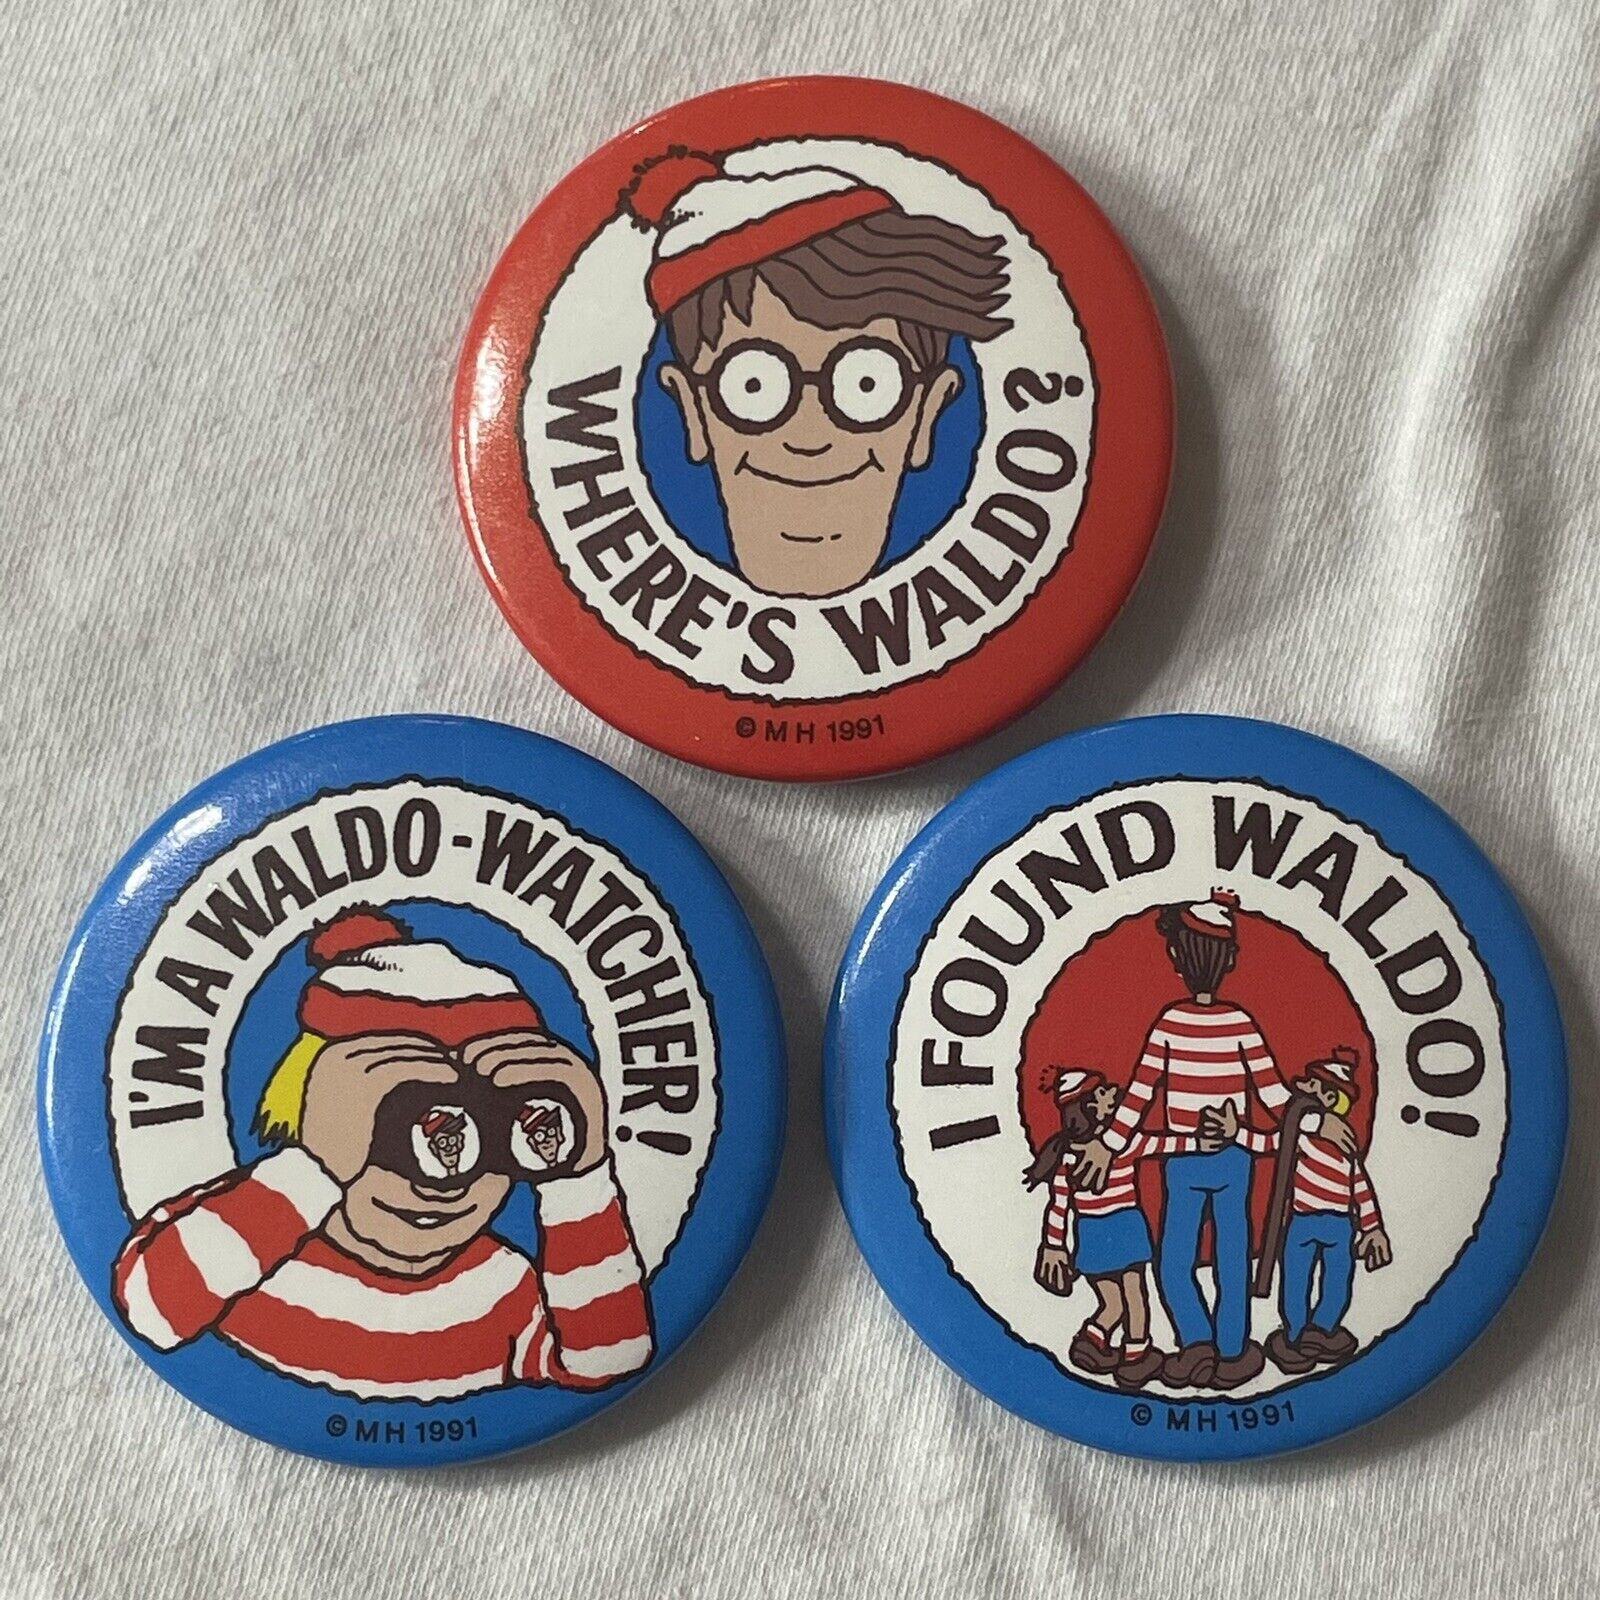 1991 WHERE’S WALDO I’M A WALDO WATCHER I FOUND WALDO 3 Pinback Button Lot B014